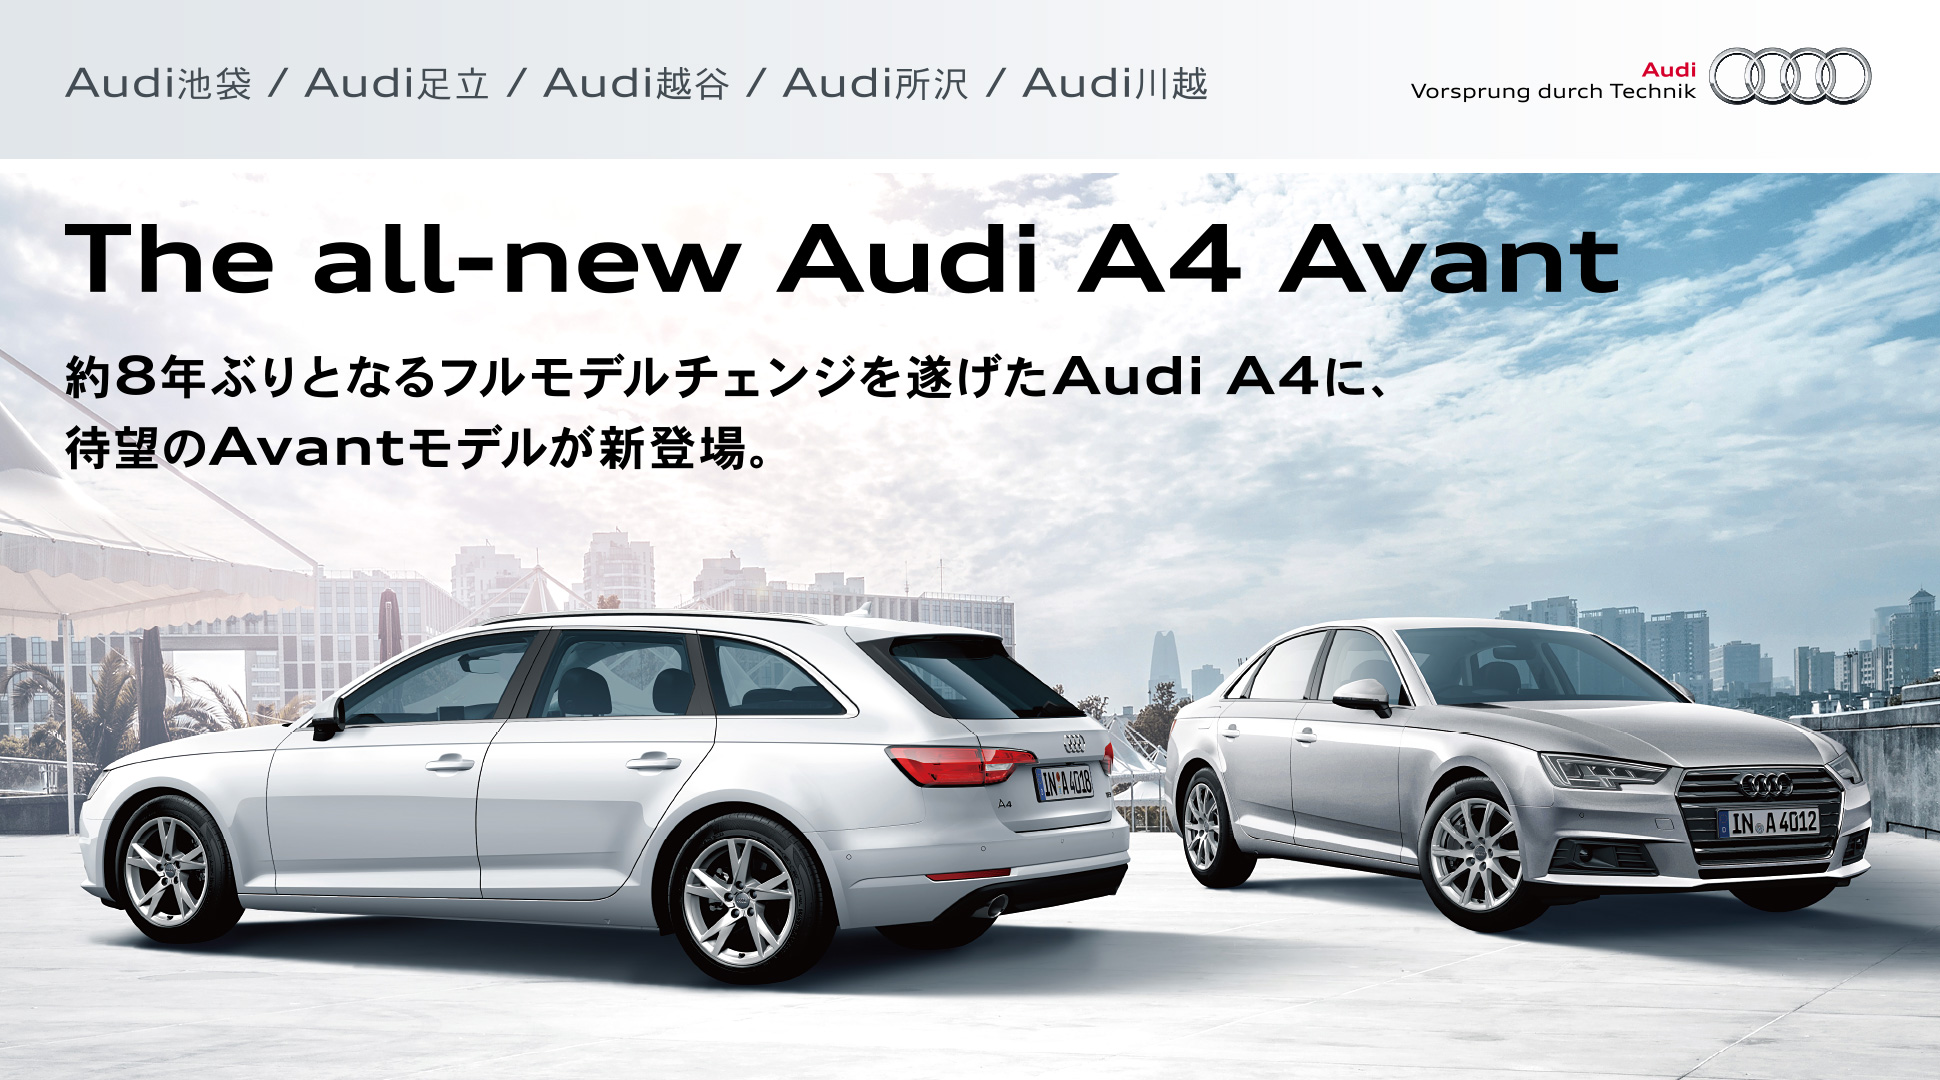 Audi池袋/Audi足立/Audi越谷/Audi所沢/Audi川越：The all-new Audi A4 Avant